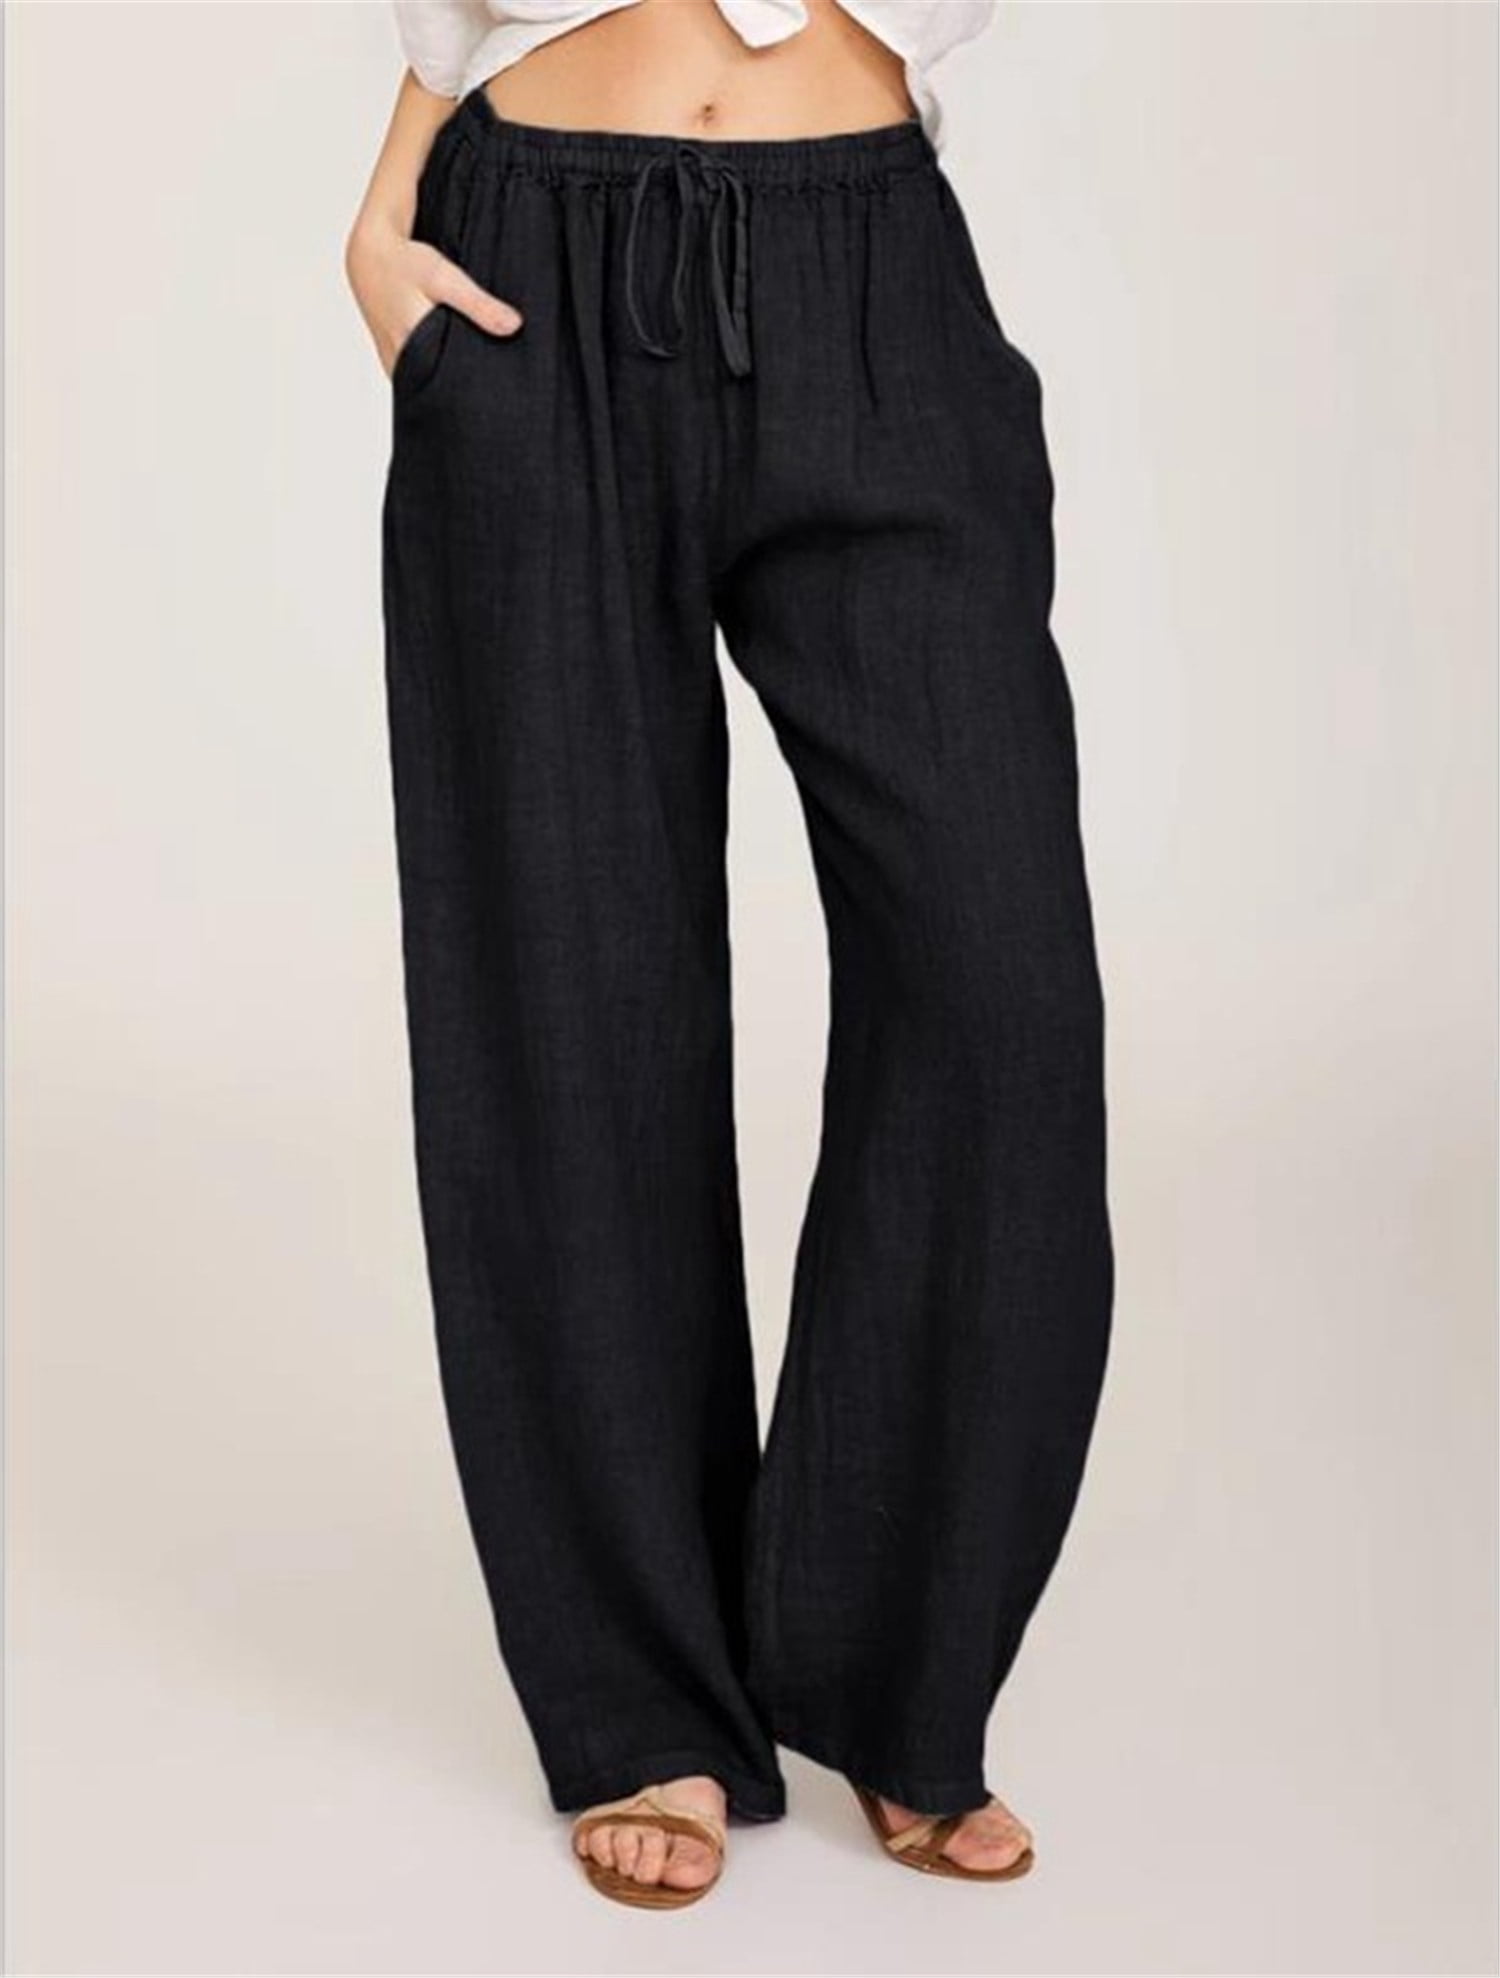 Jdadrh Women's Comfy Pajama Pants Casual Stretch Pant Drawstring Palazzo Lounge Pants Wide Leg Pj Bottoms 